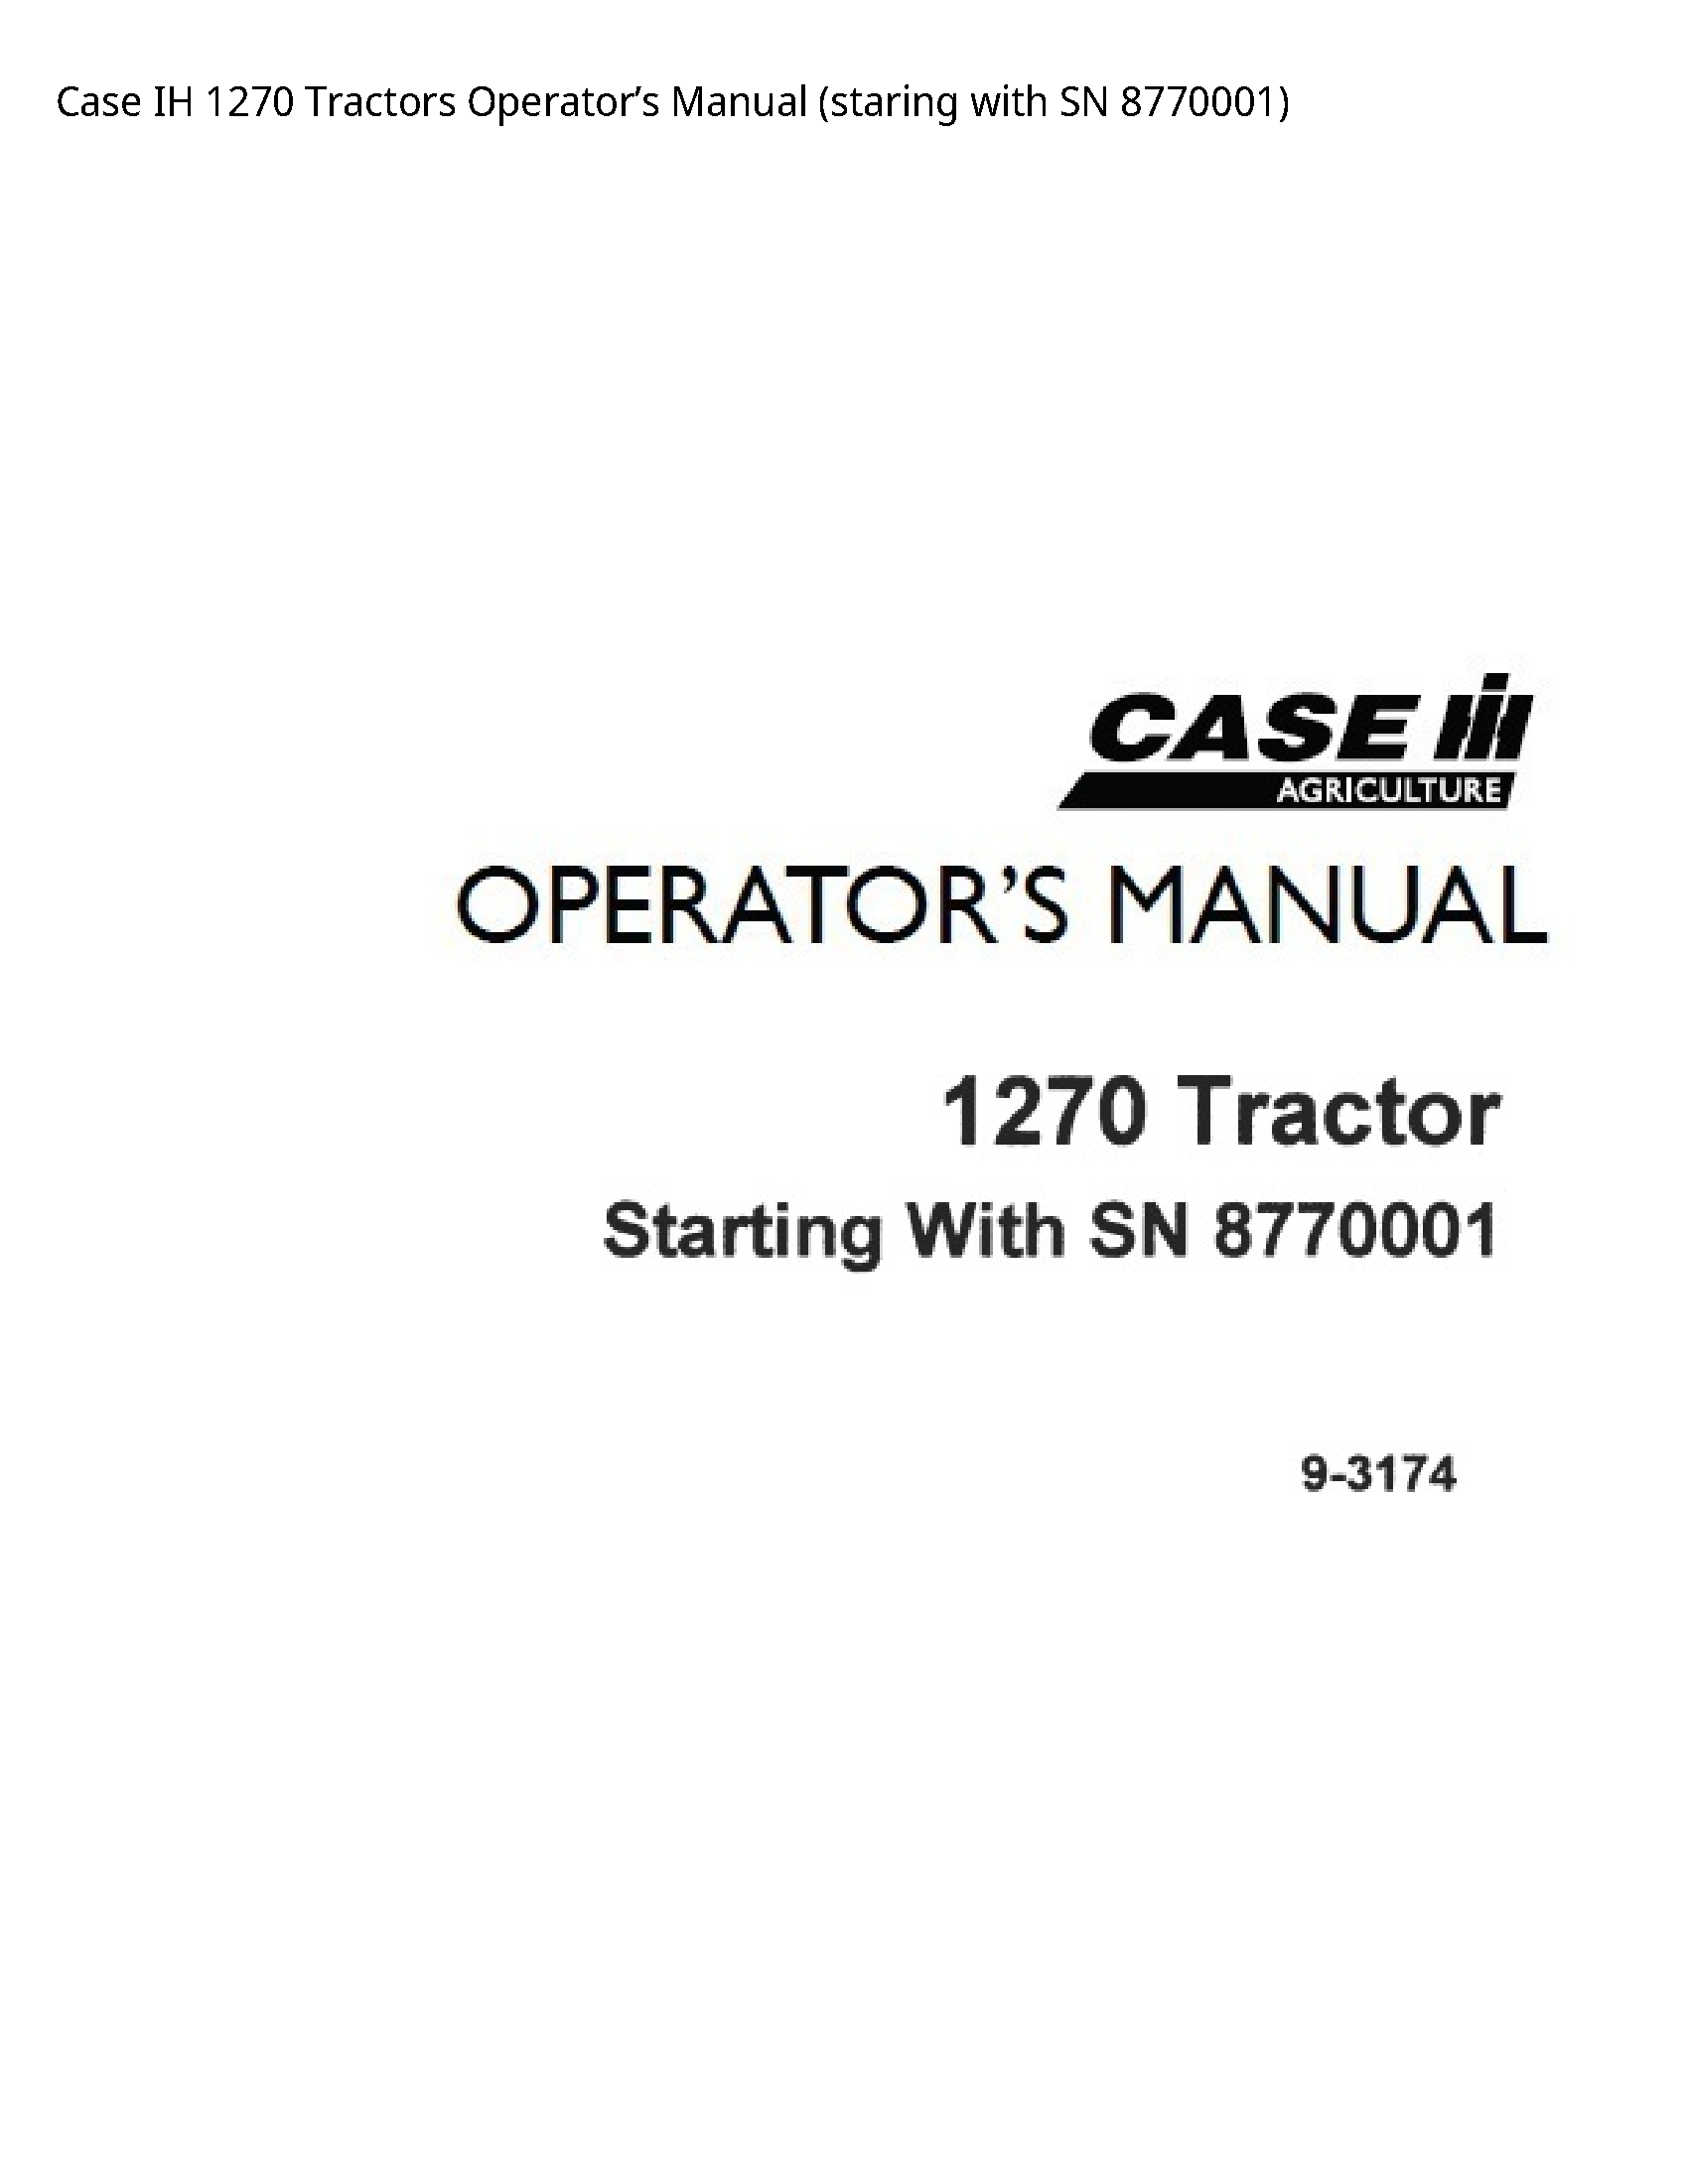 Case/Case IH 1270 IH Tractors Operator’s manual